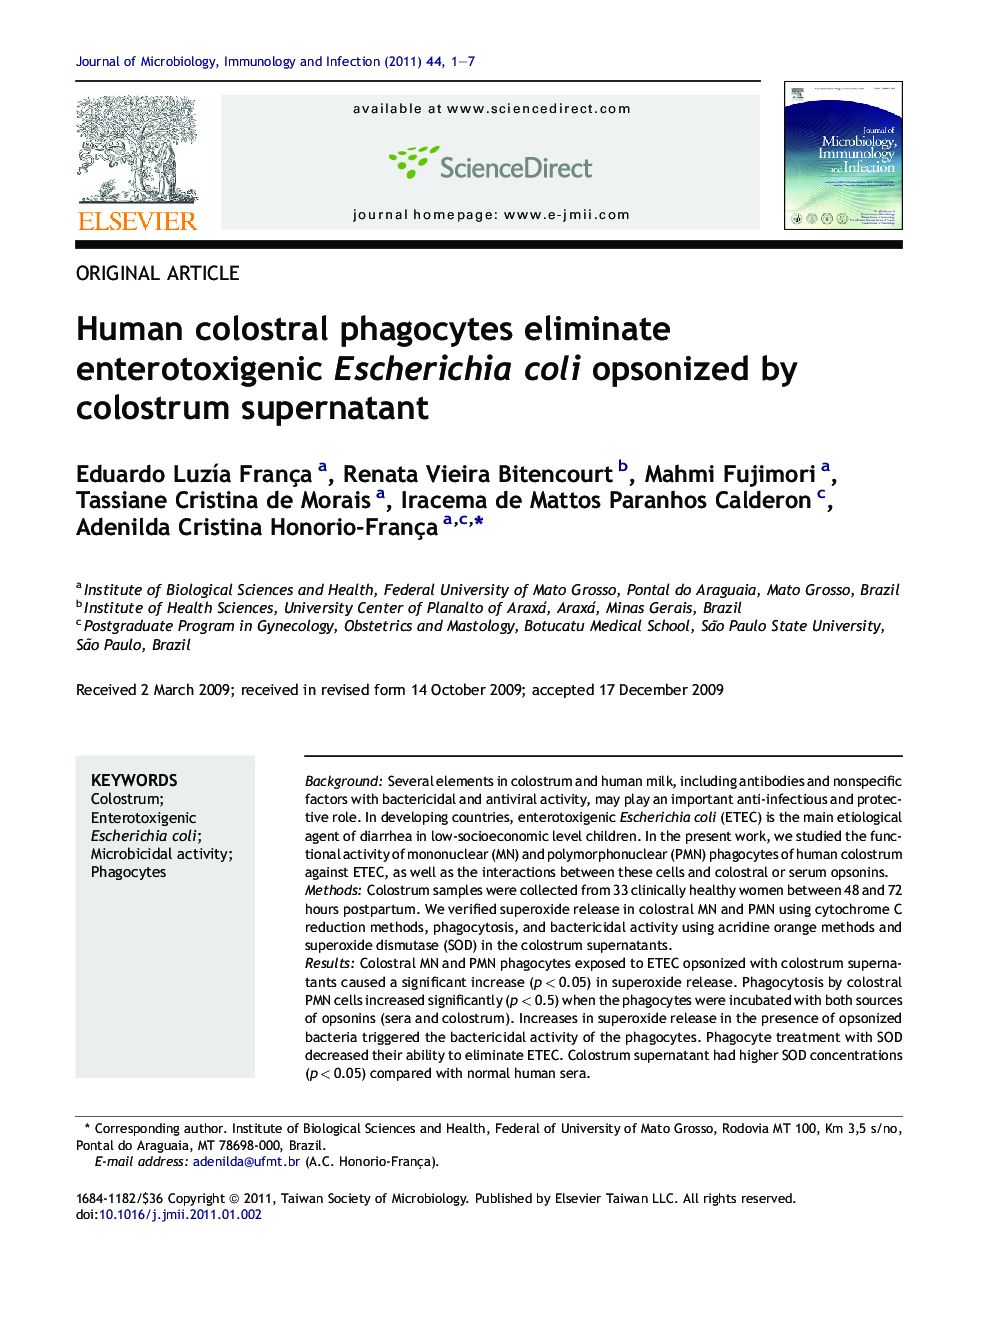 Human colostral phagocytes eliminate enterotoxigenic Escherichia coli opsonized by colostrum supernatant